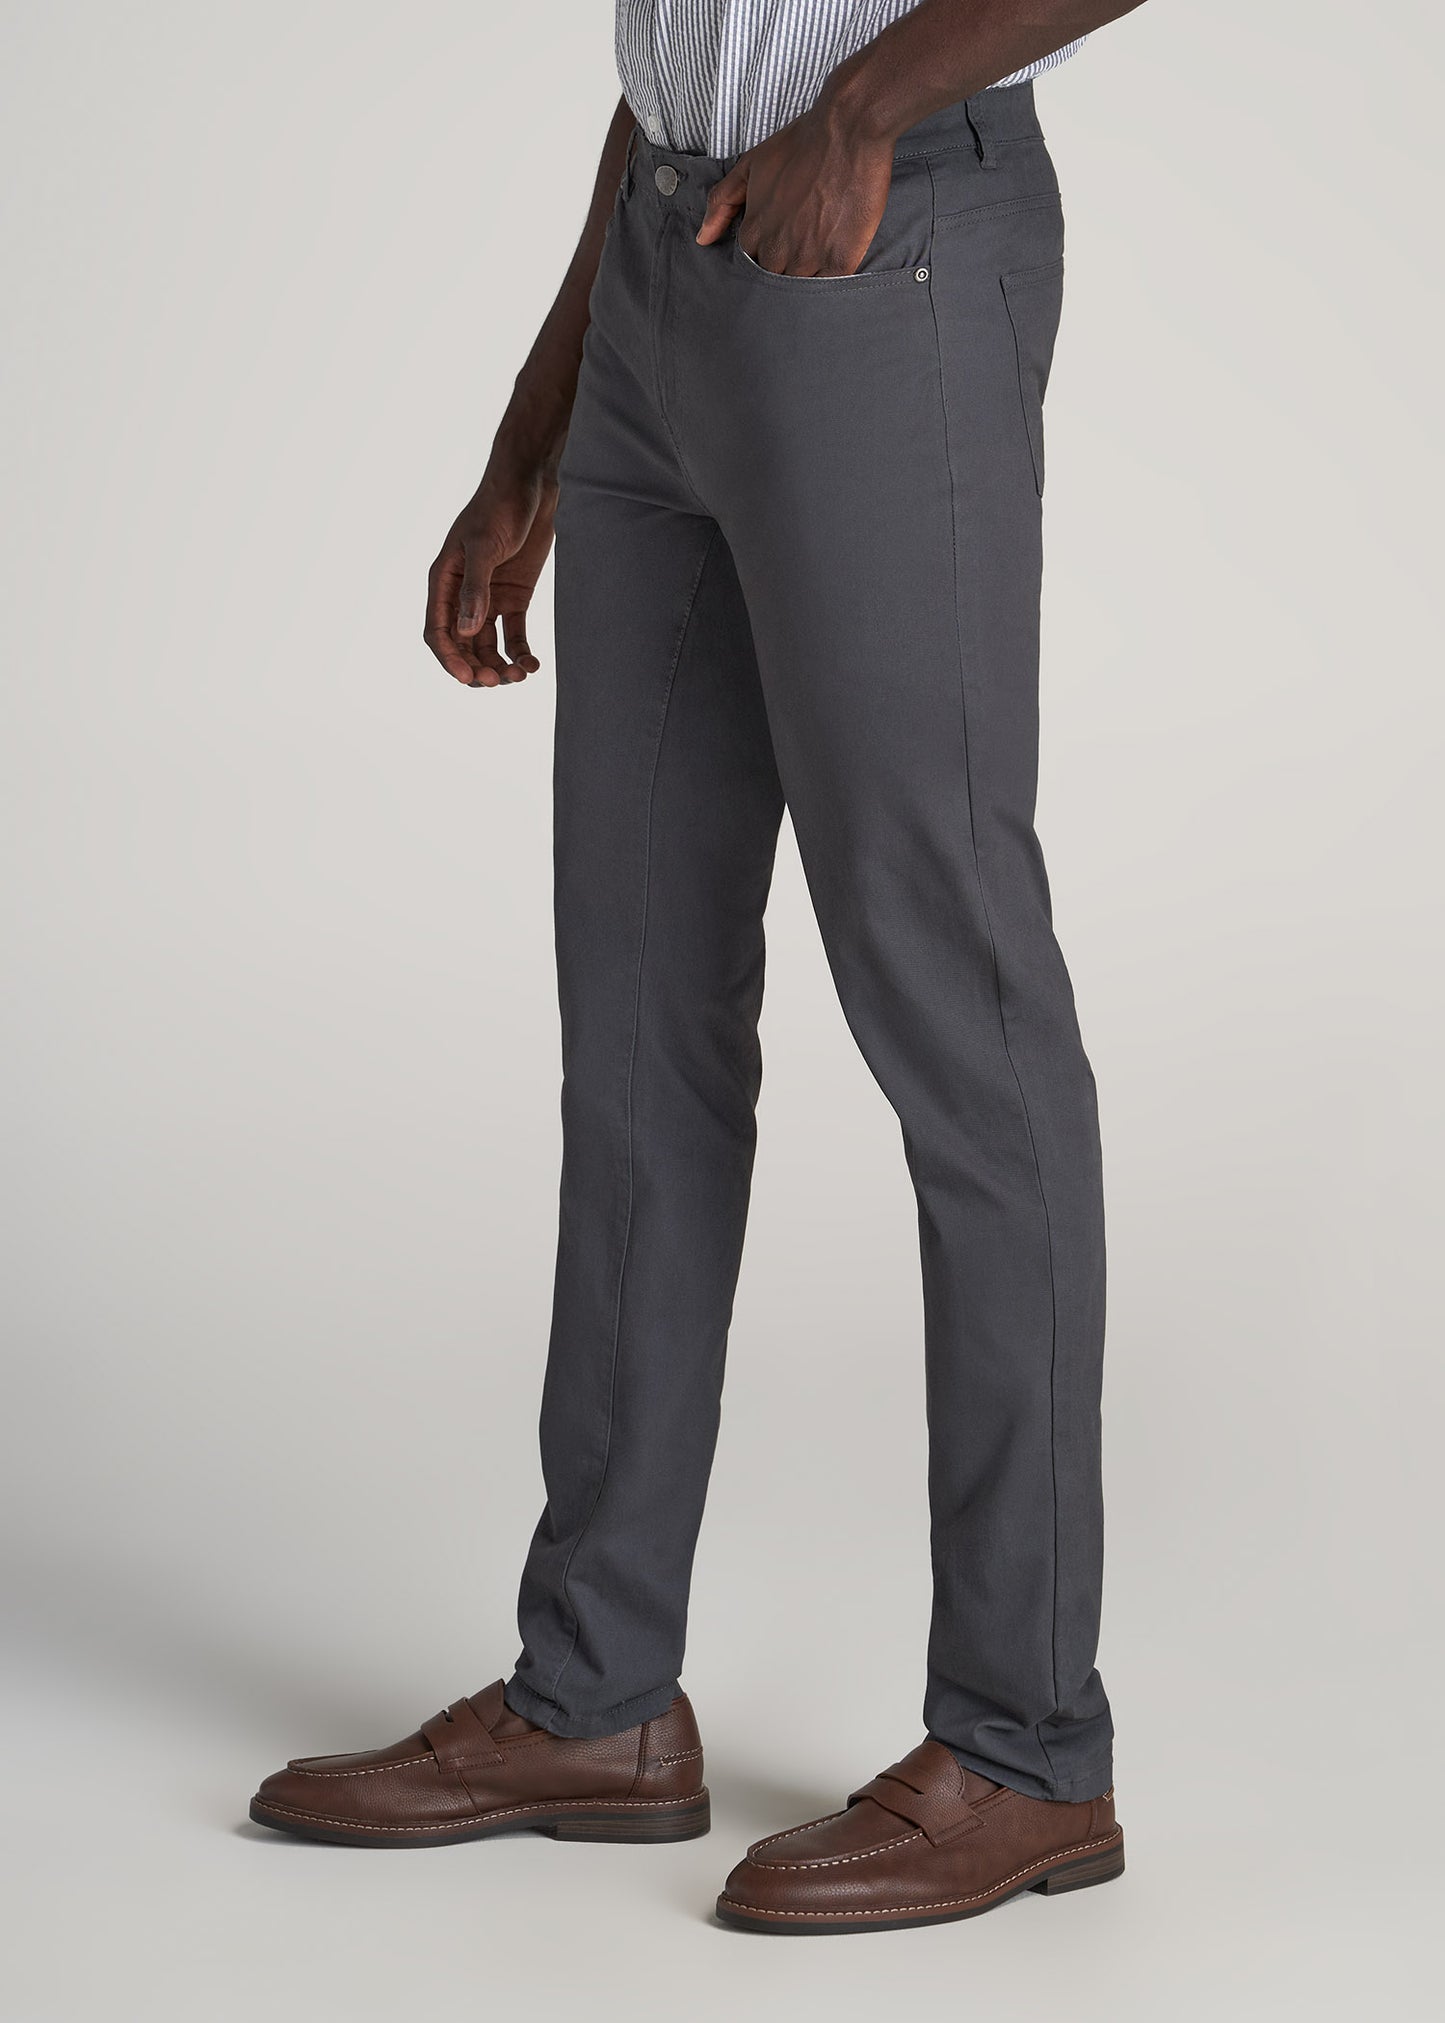 Men's Tall Dylan Slim Fit Five-Pocket Pants Iron Grey